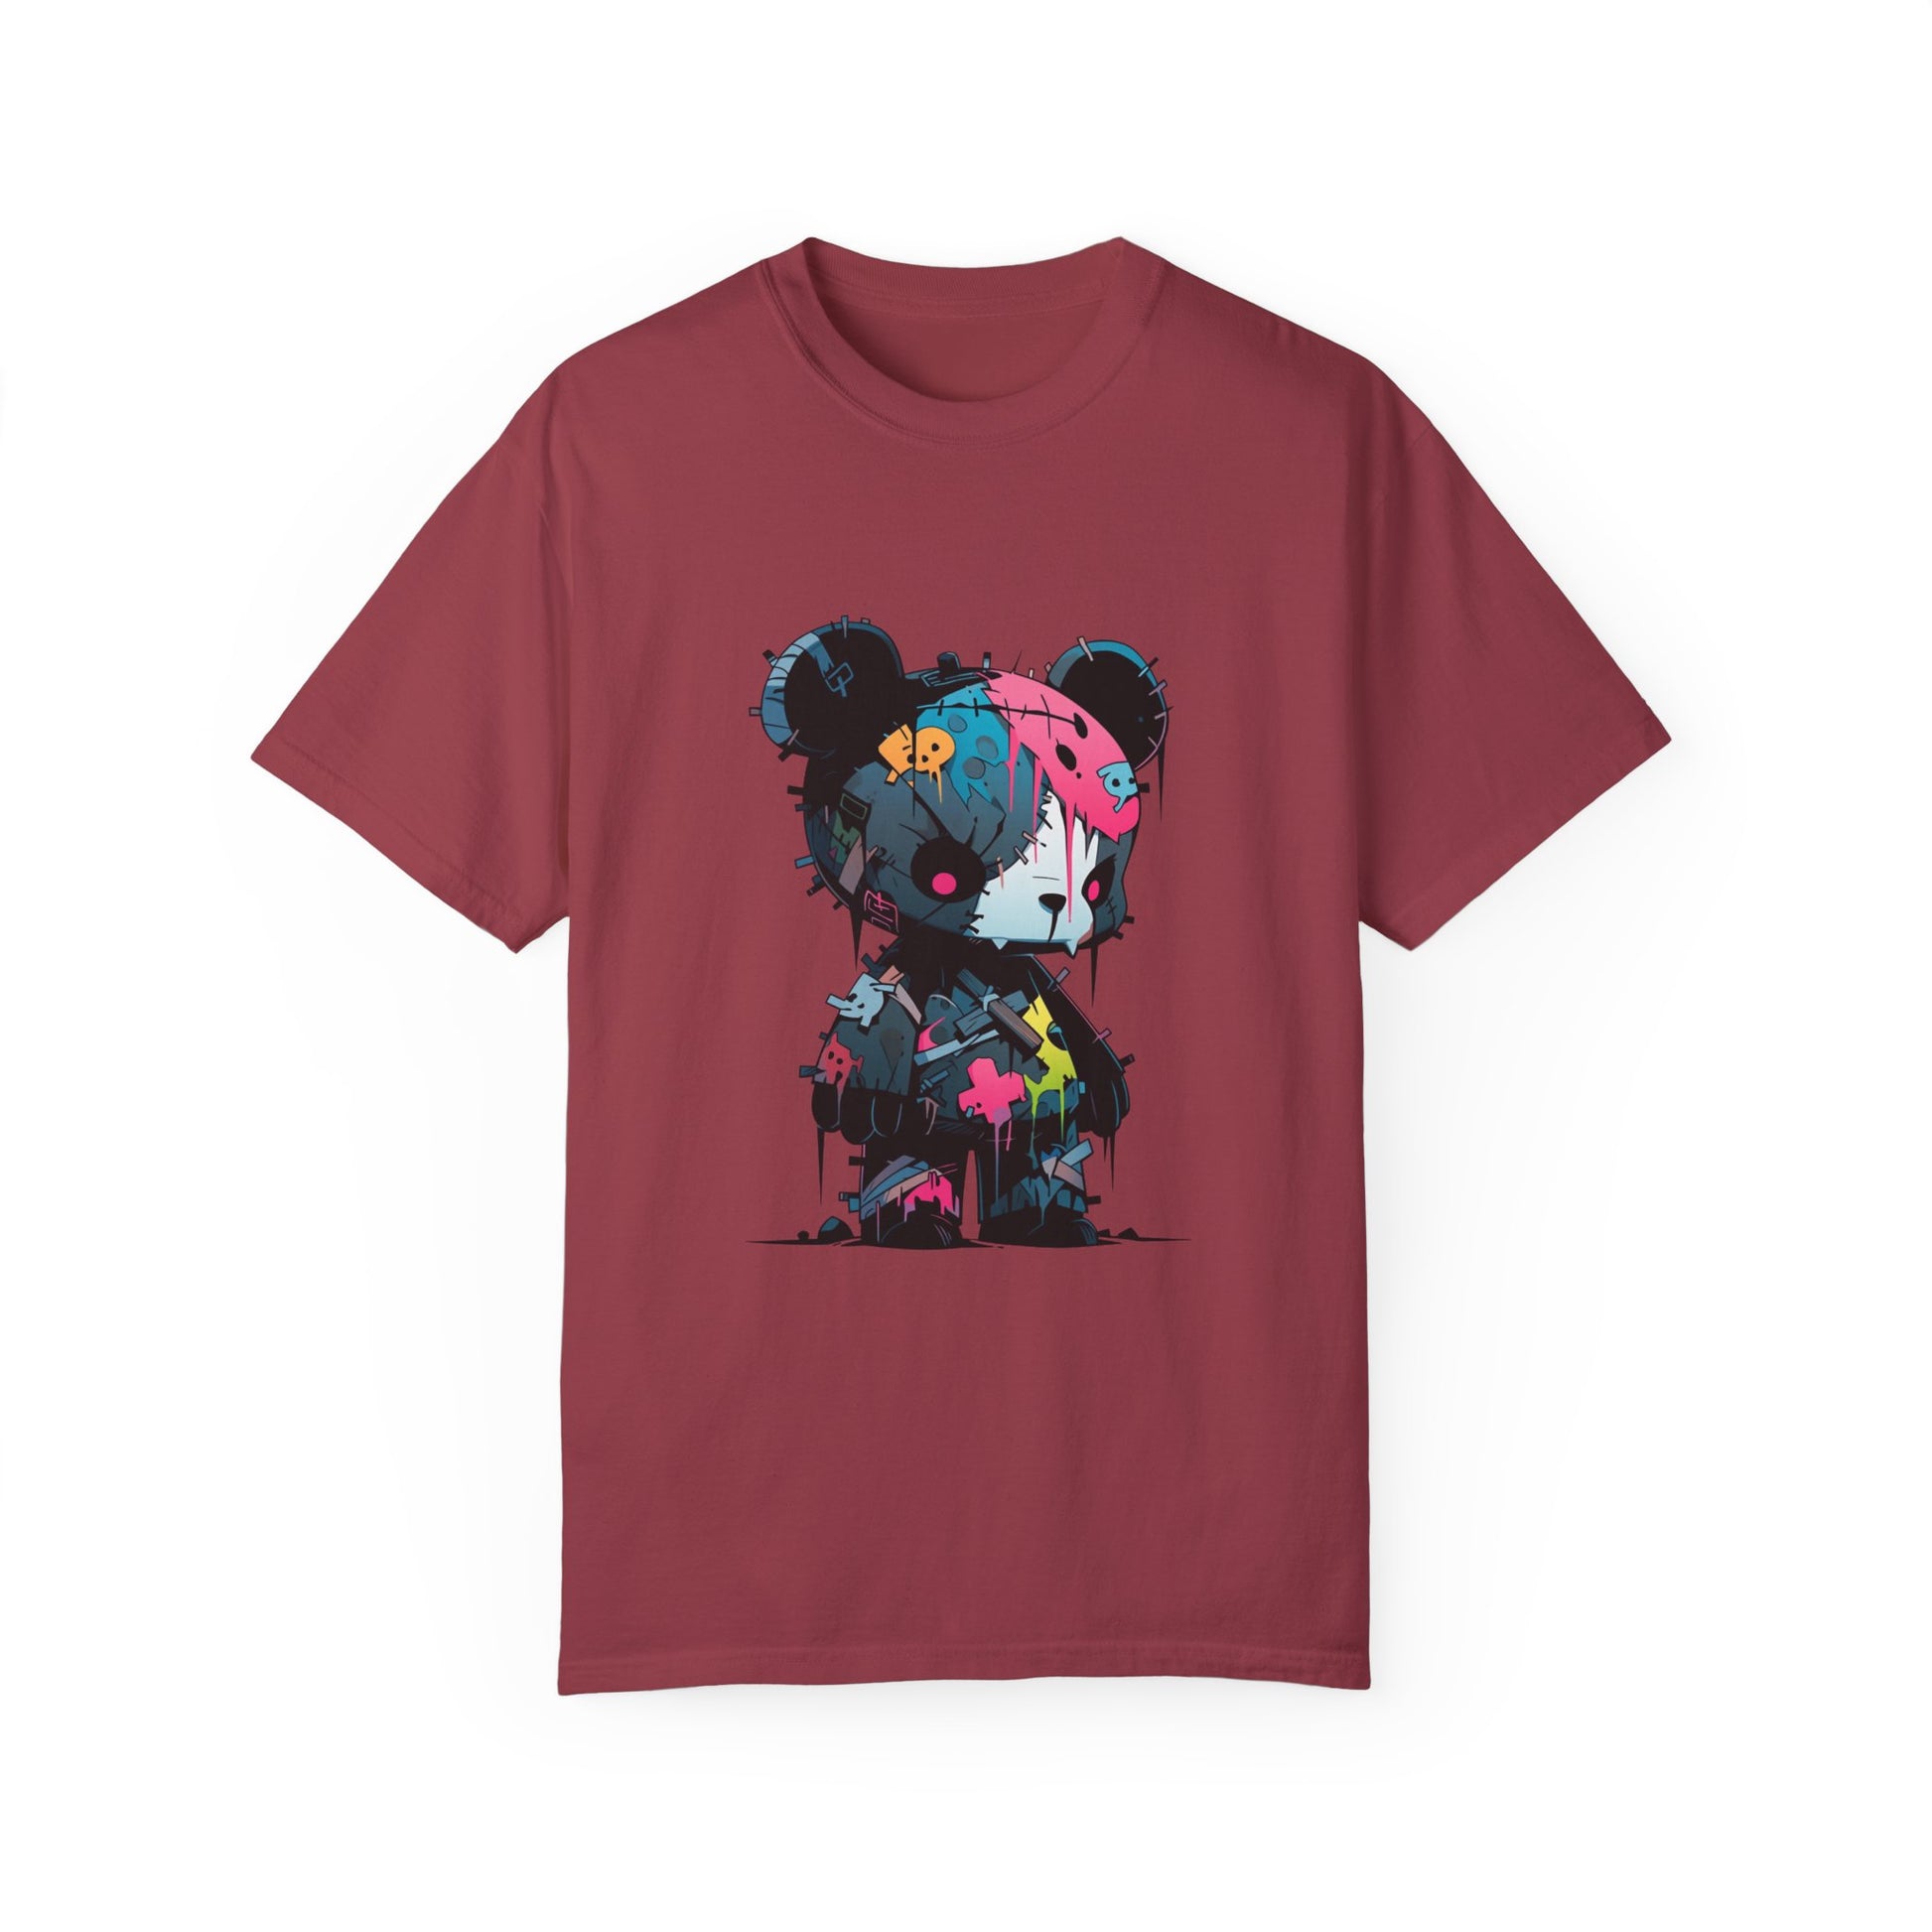 Hip Hop Teddy Bear Graphic Unisex Garment-dyed T-shirt Cotton Funny Humorous Graphic Soft Premium Unisex Men Women Chili T-shirt Birthday Gift-7